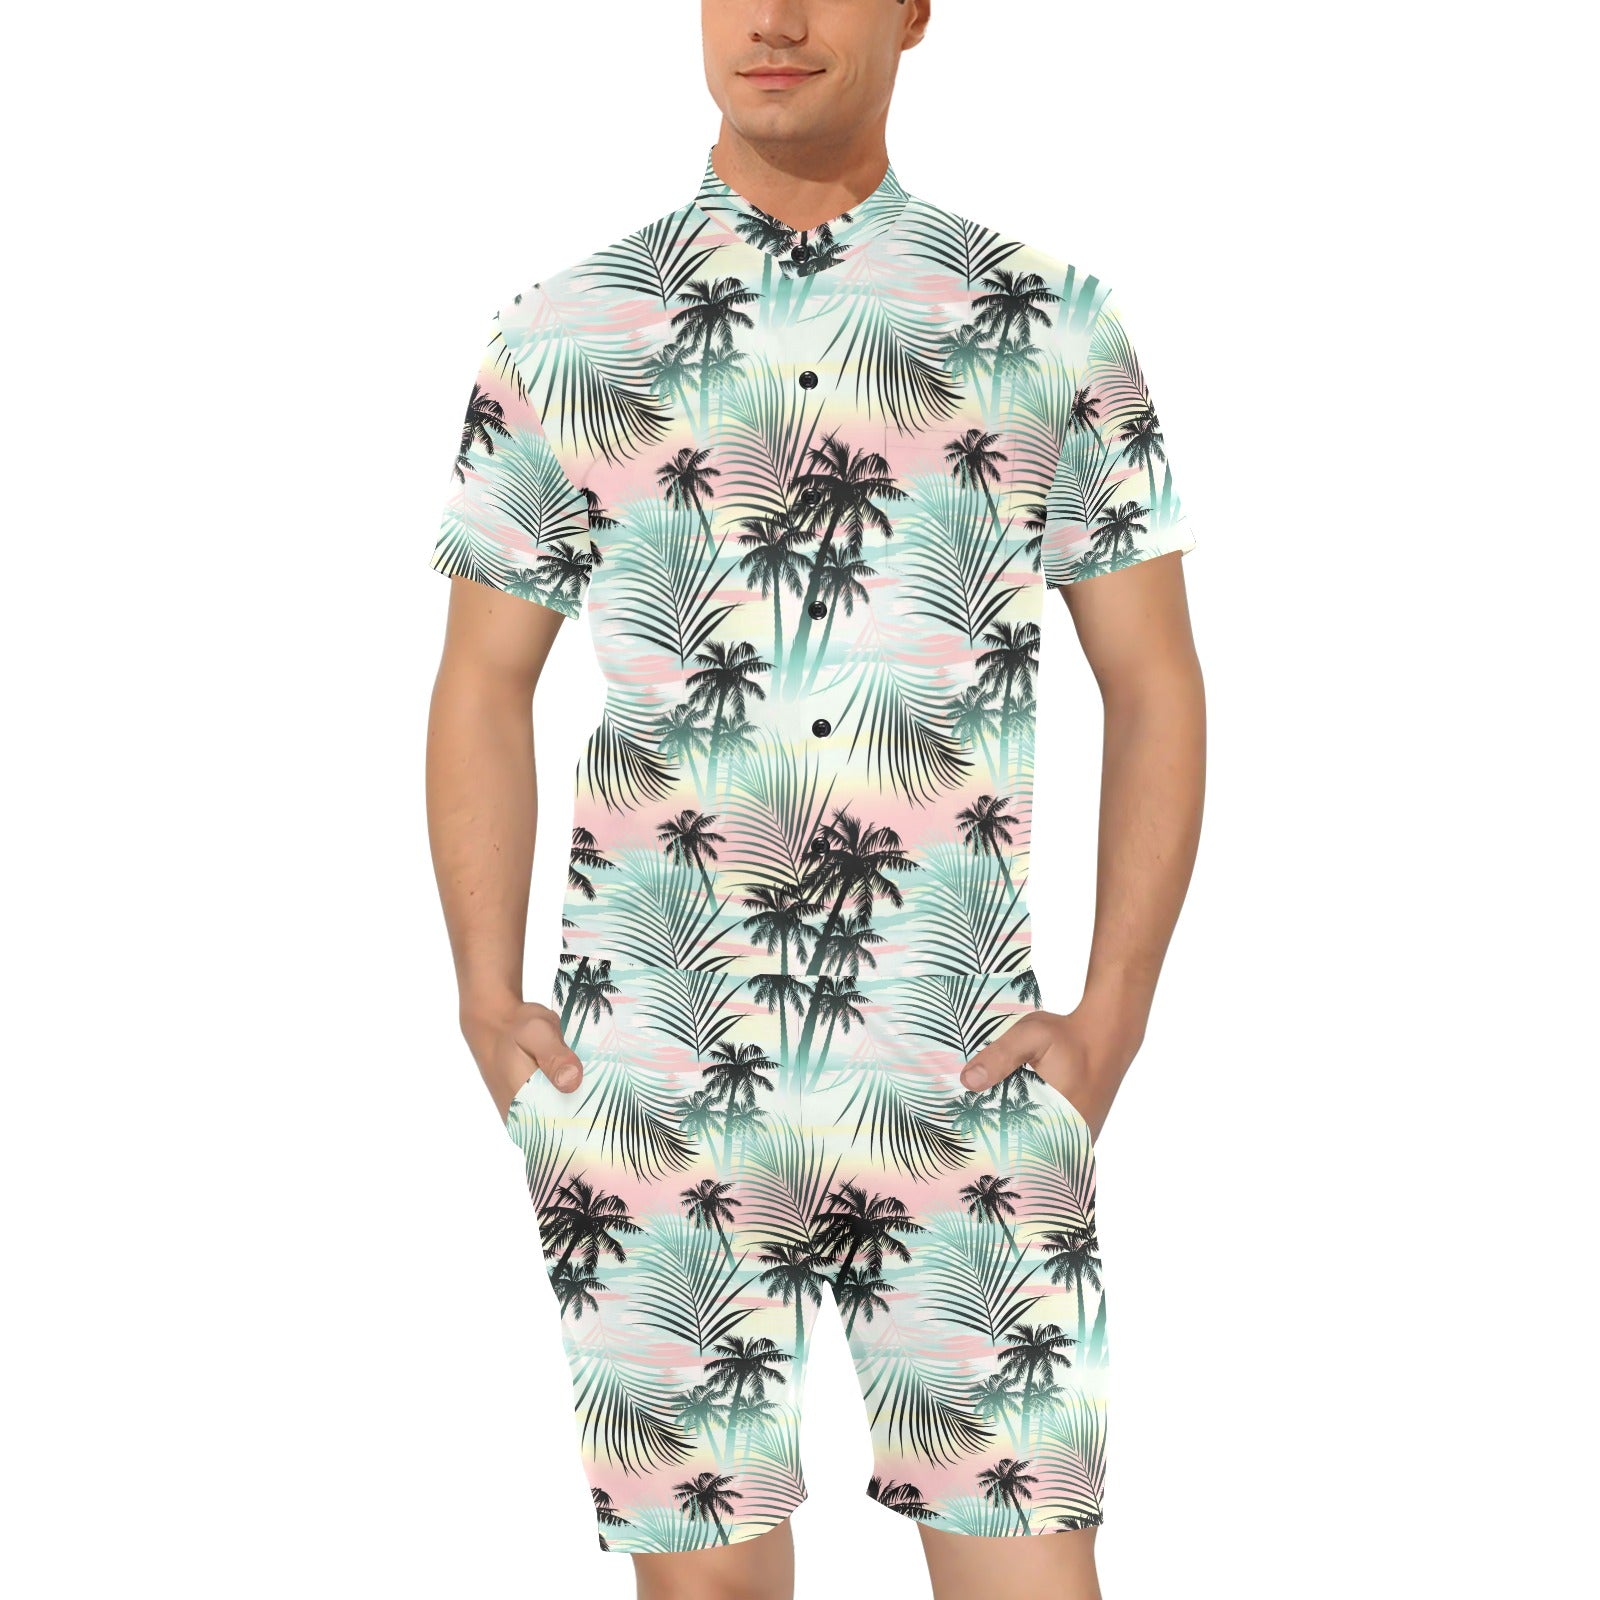 Palm Tree Pattern Print Design A03 Men's Romper